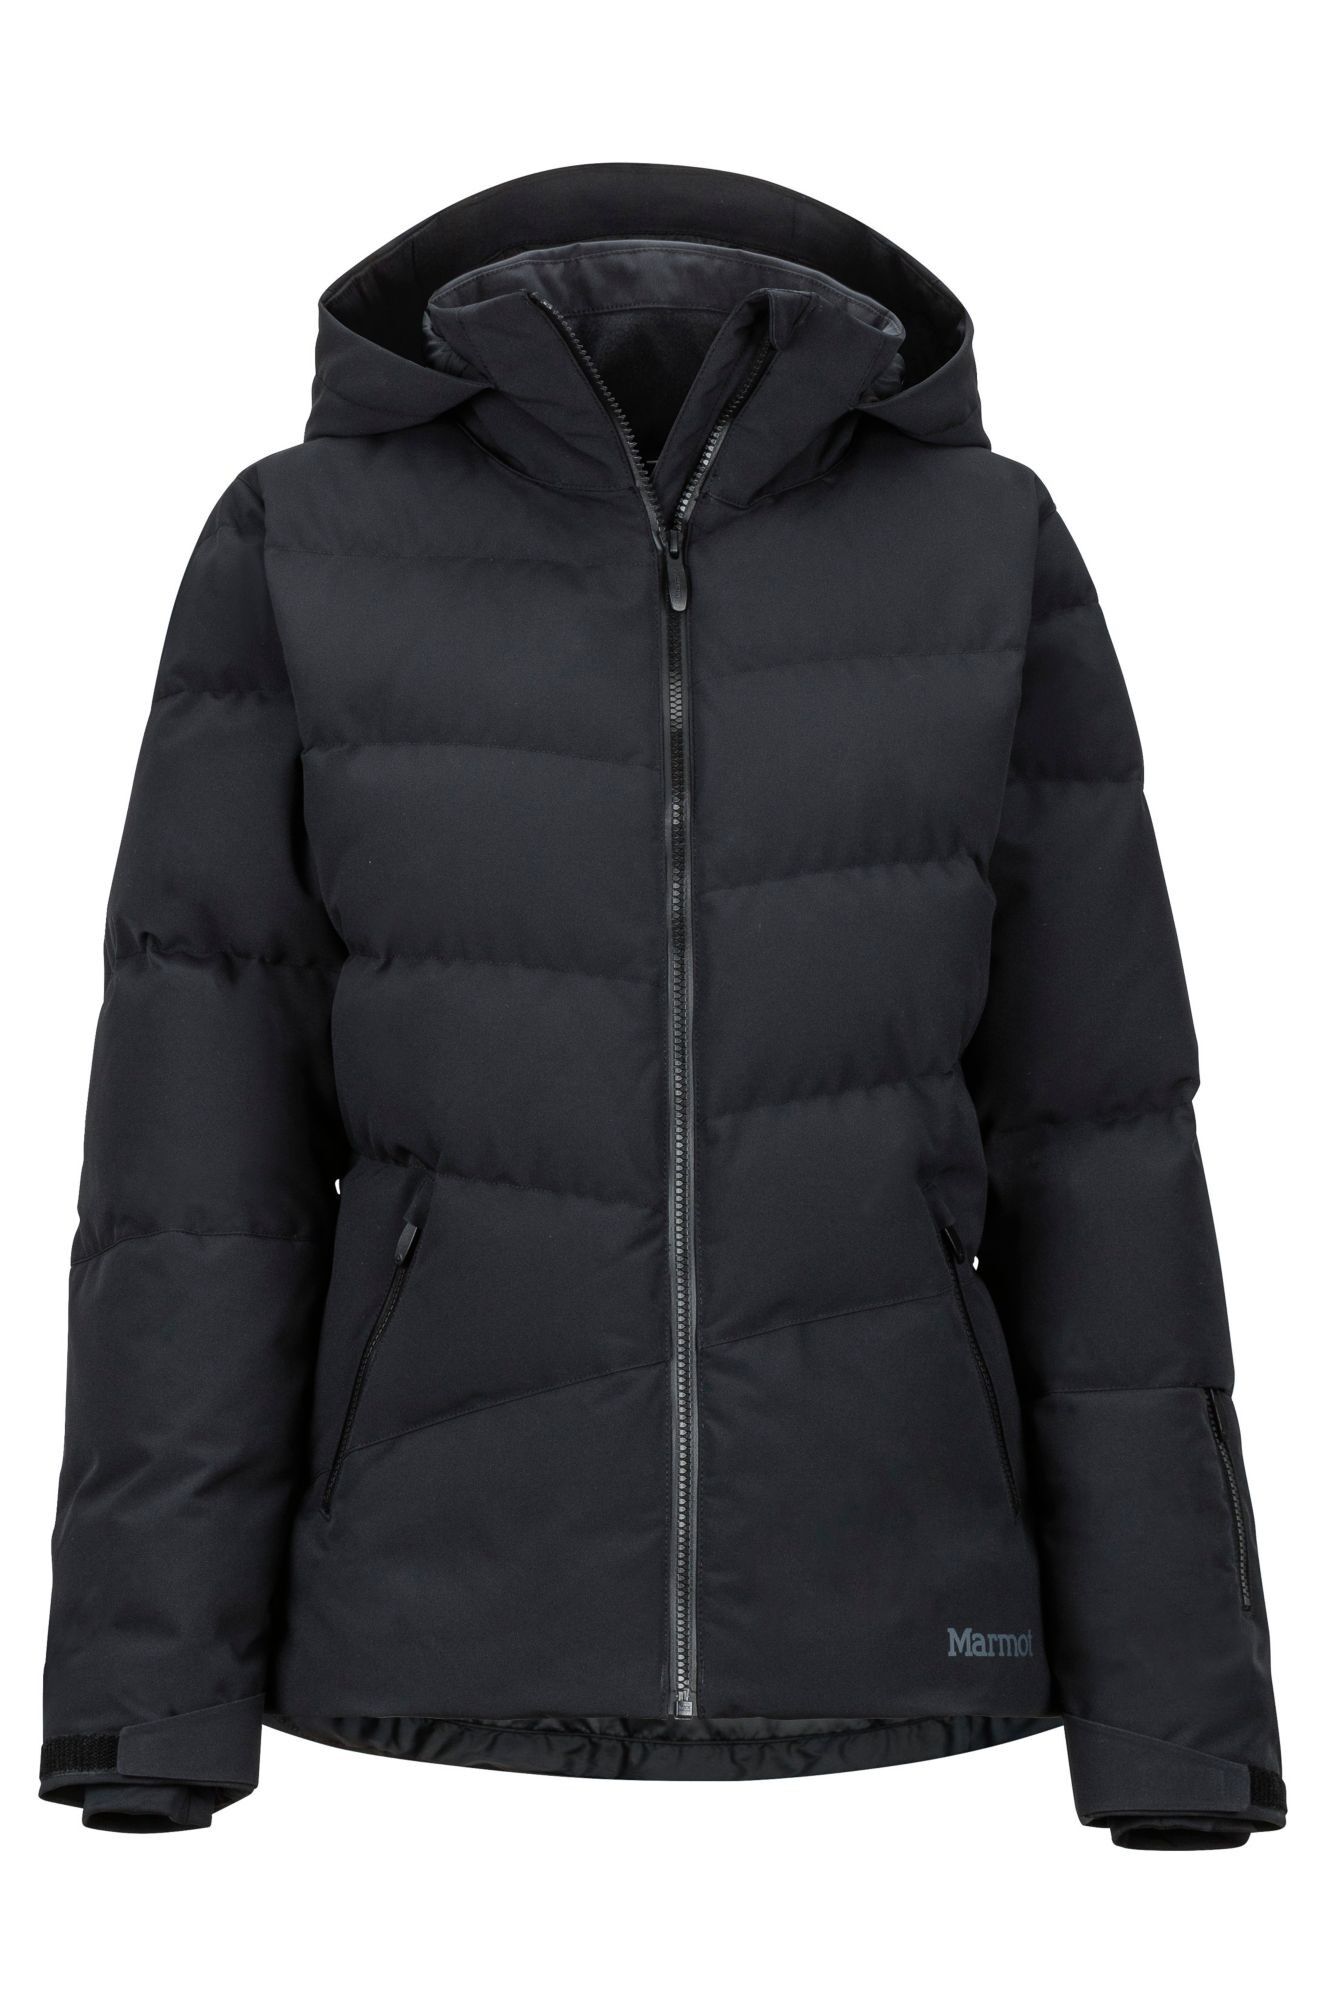 Marmot Slingshot Jacket - Chaqueta de esquí - Mujer